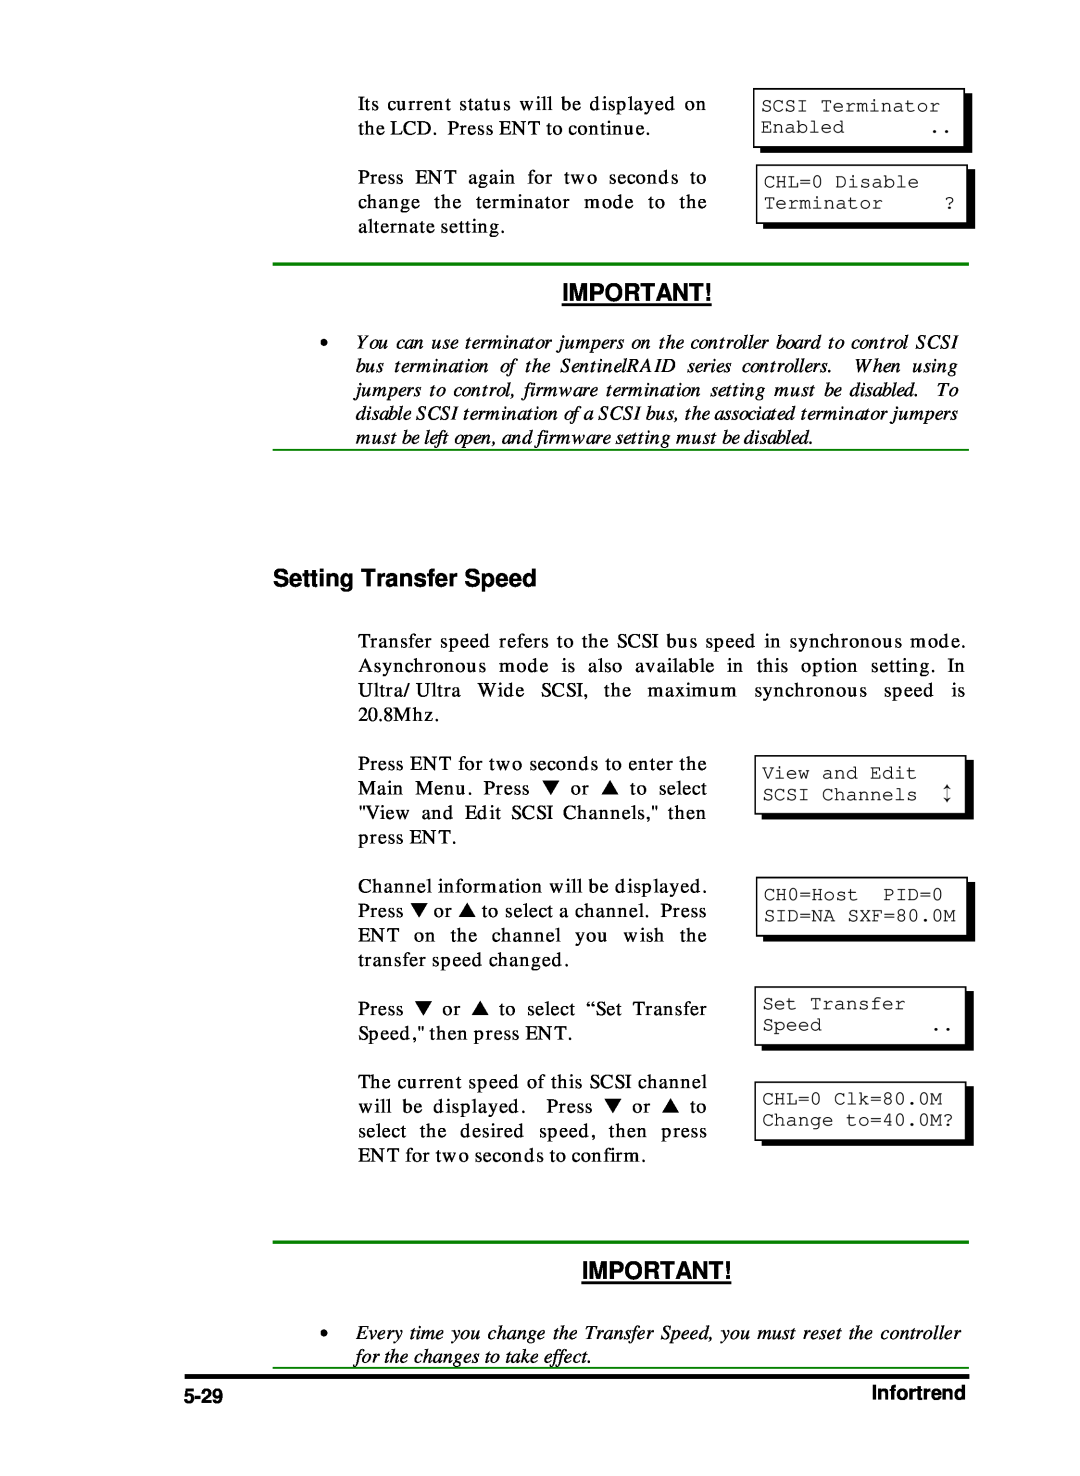 Compaq Infortrend manual Setting Transfer Speed 